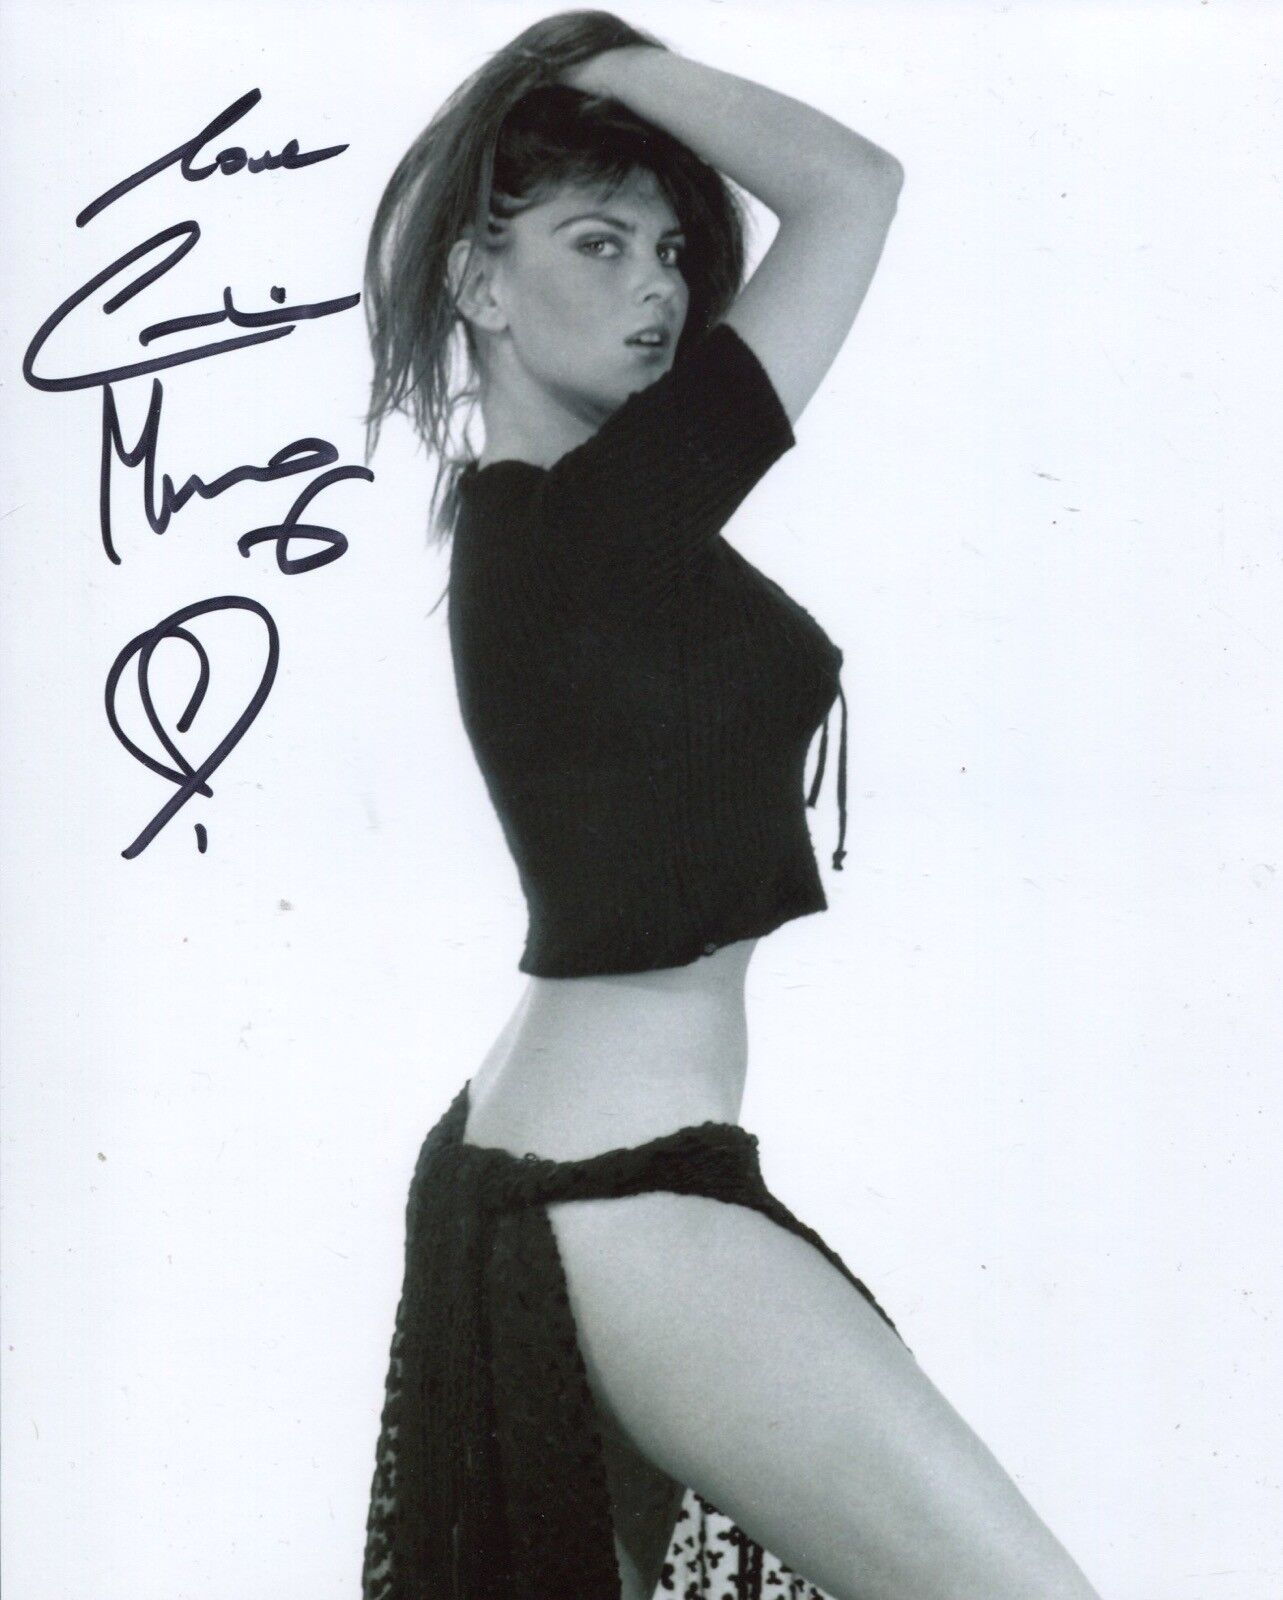 007 Bond girl Caroline Munro signed sexy pose 8x10 Photo Poster painting UACC DEALER